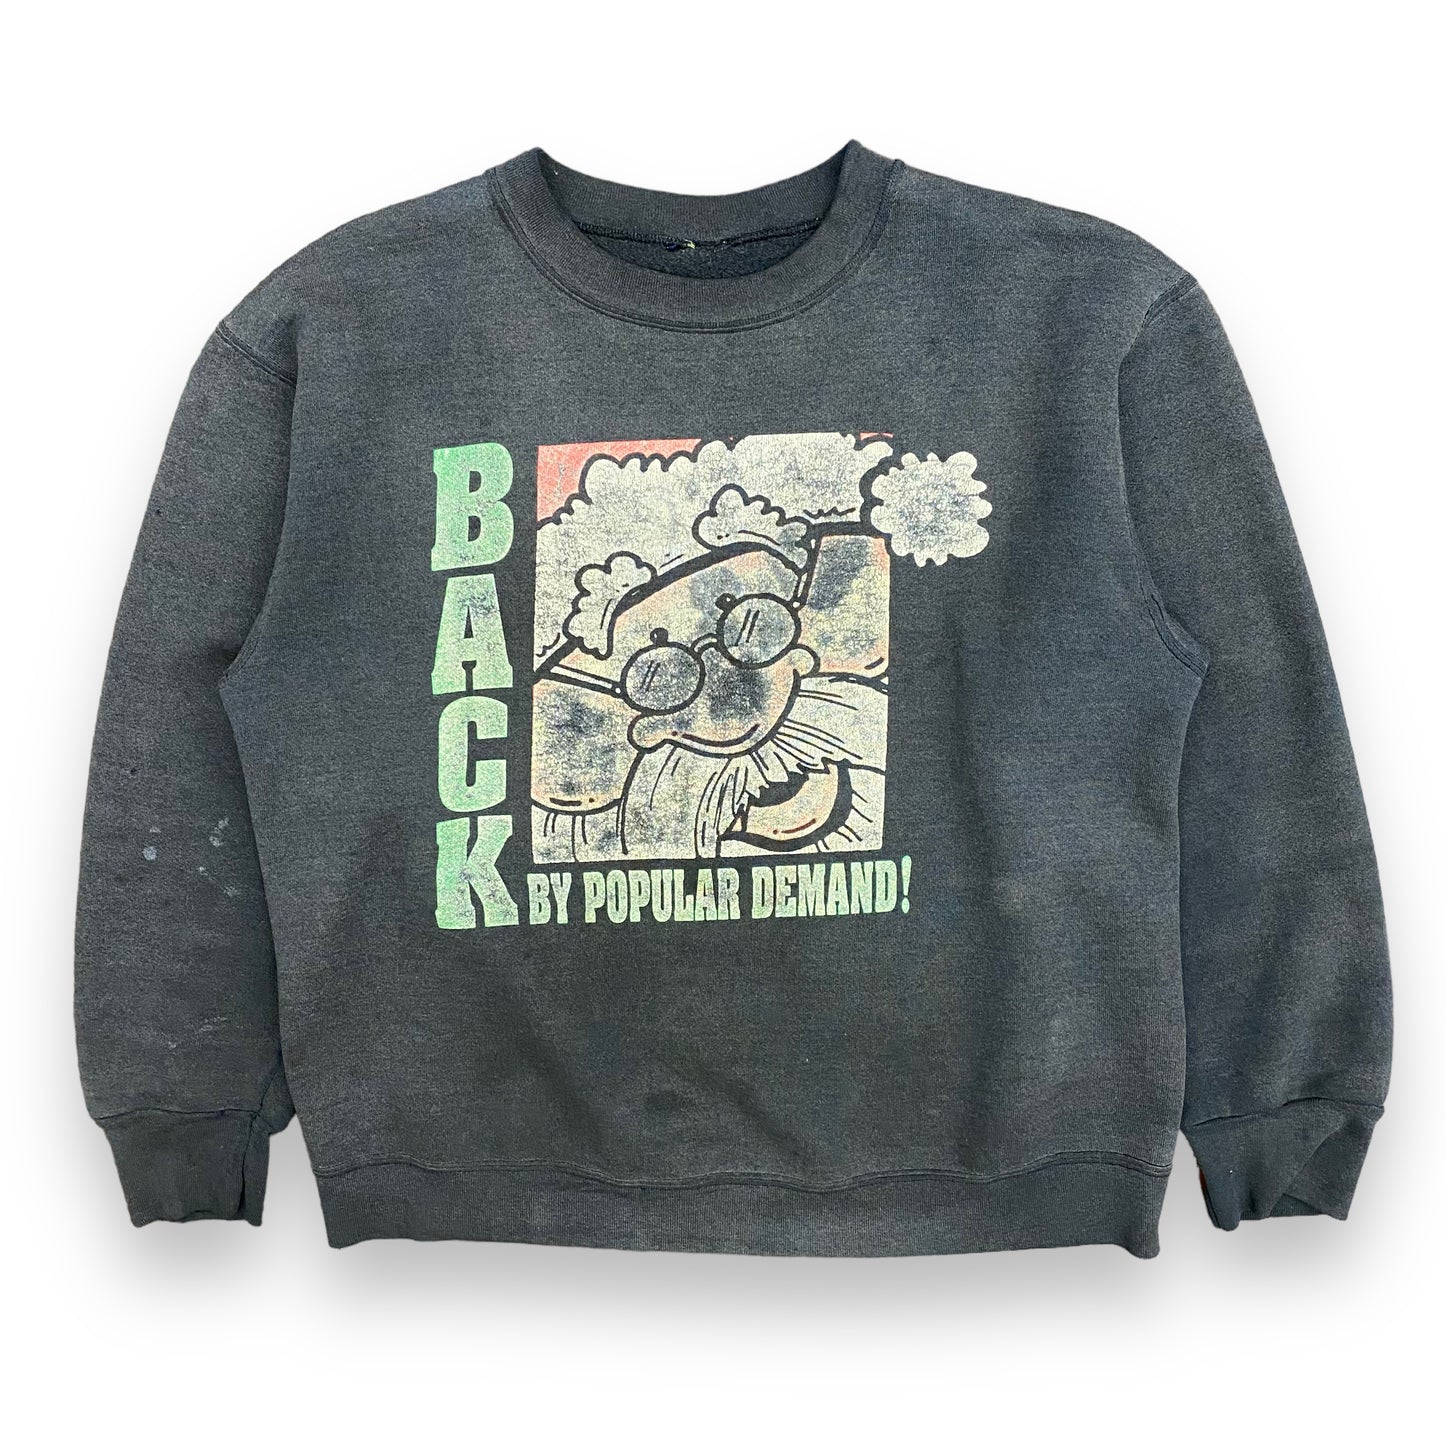 Vintage 1990s "Back by Popular Demand" Cartoon Sweatshirt - Size Large